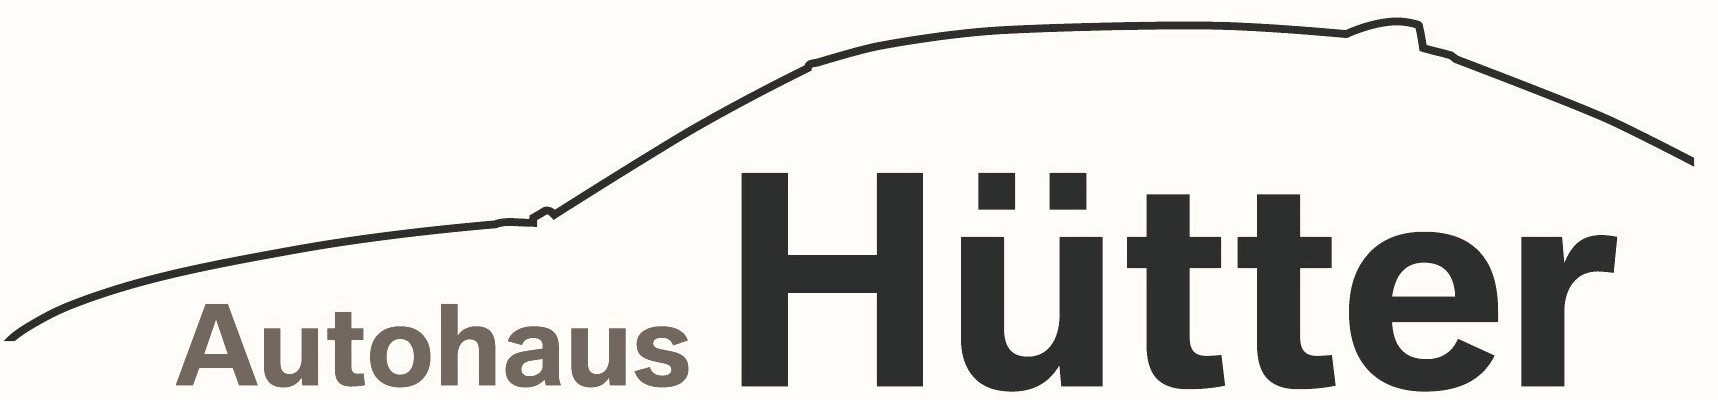 Autohaus Hütter